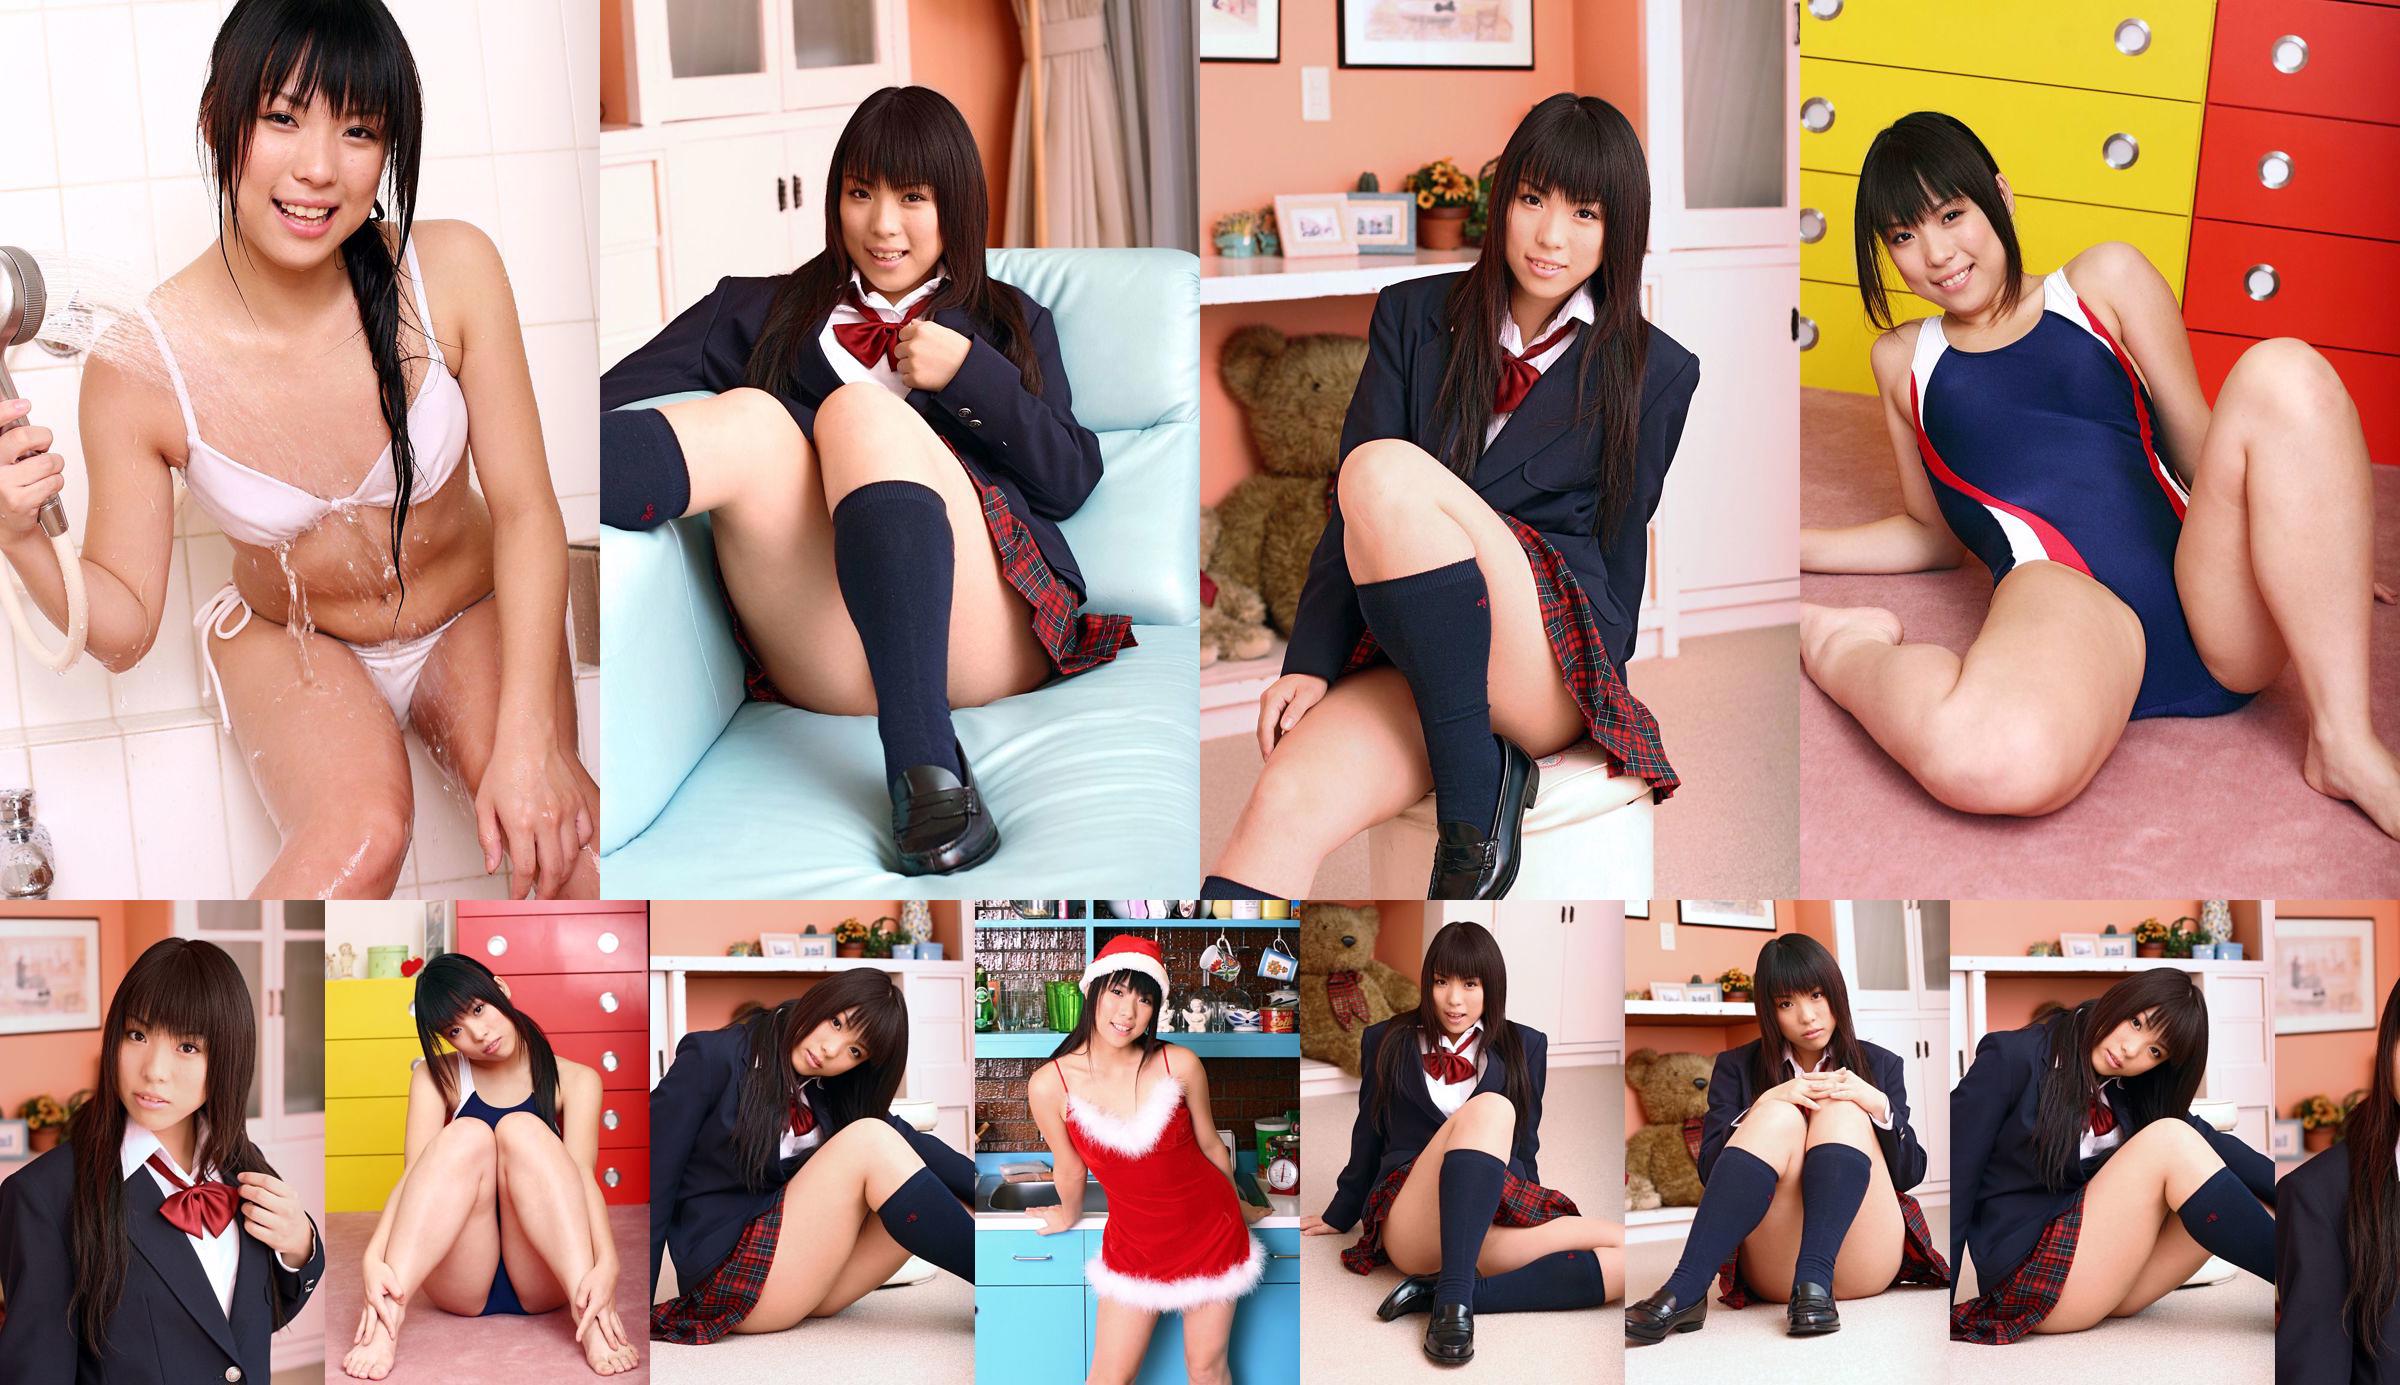 [DGC] Nr. 375 Chiharu Shirakawa Uniform schönes Mädchen Himmel No.424766 Seite 3